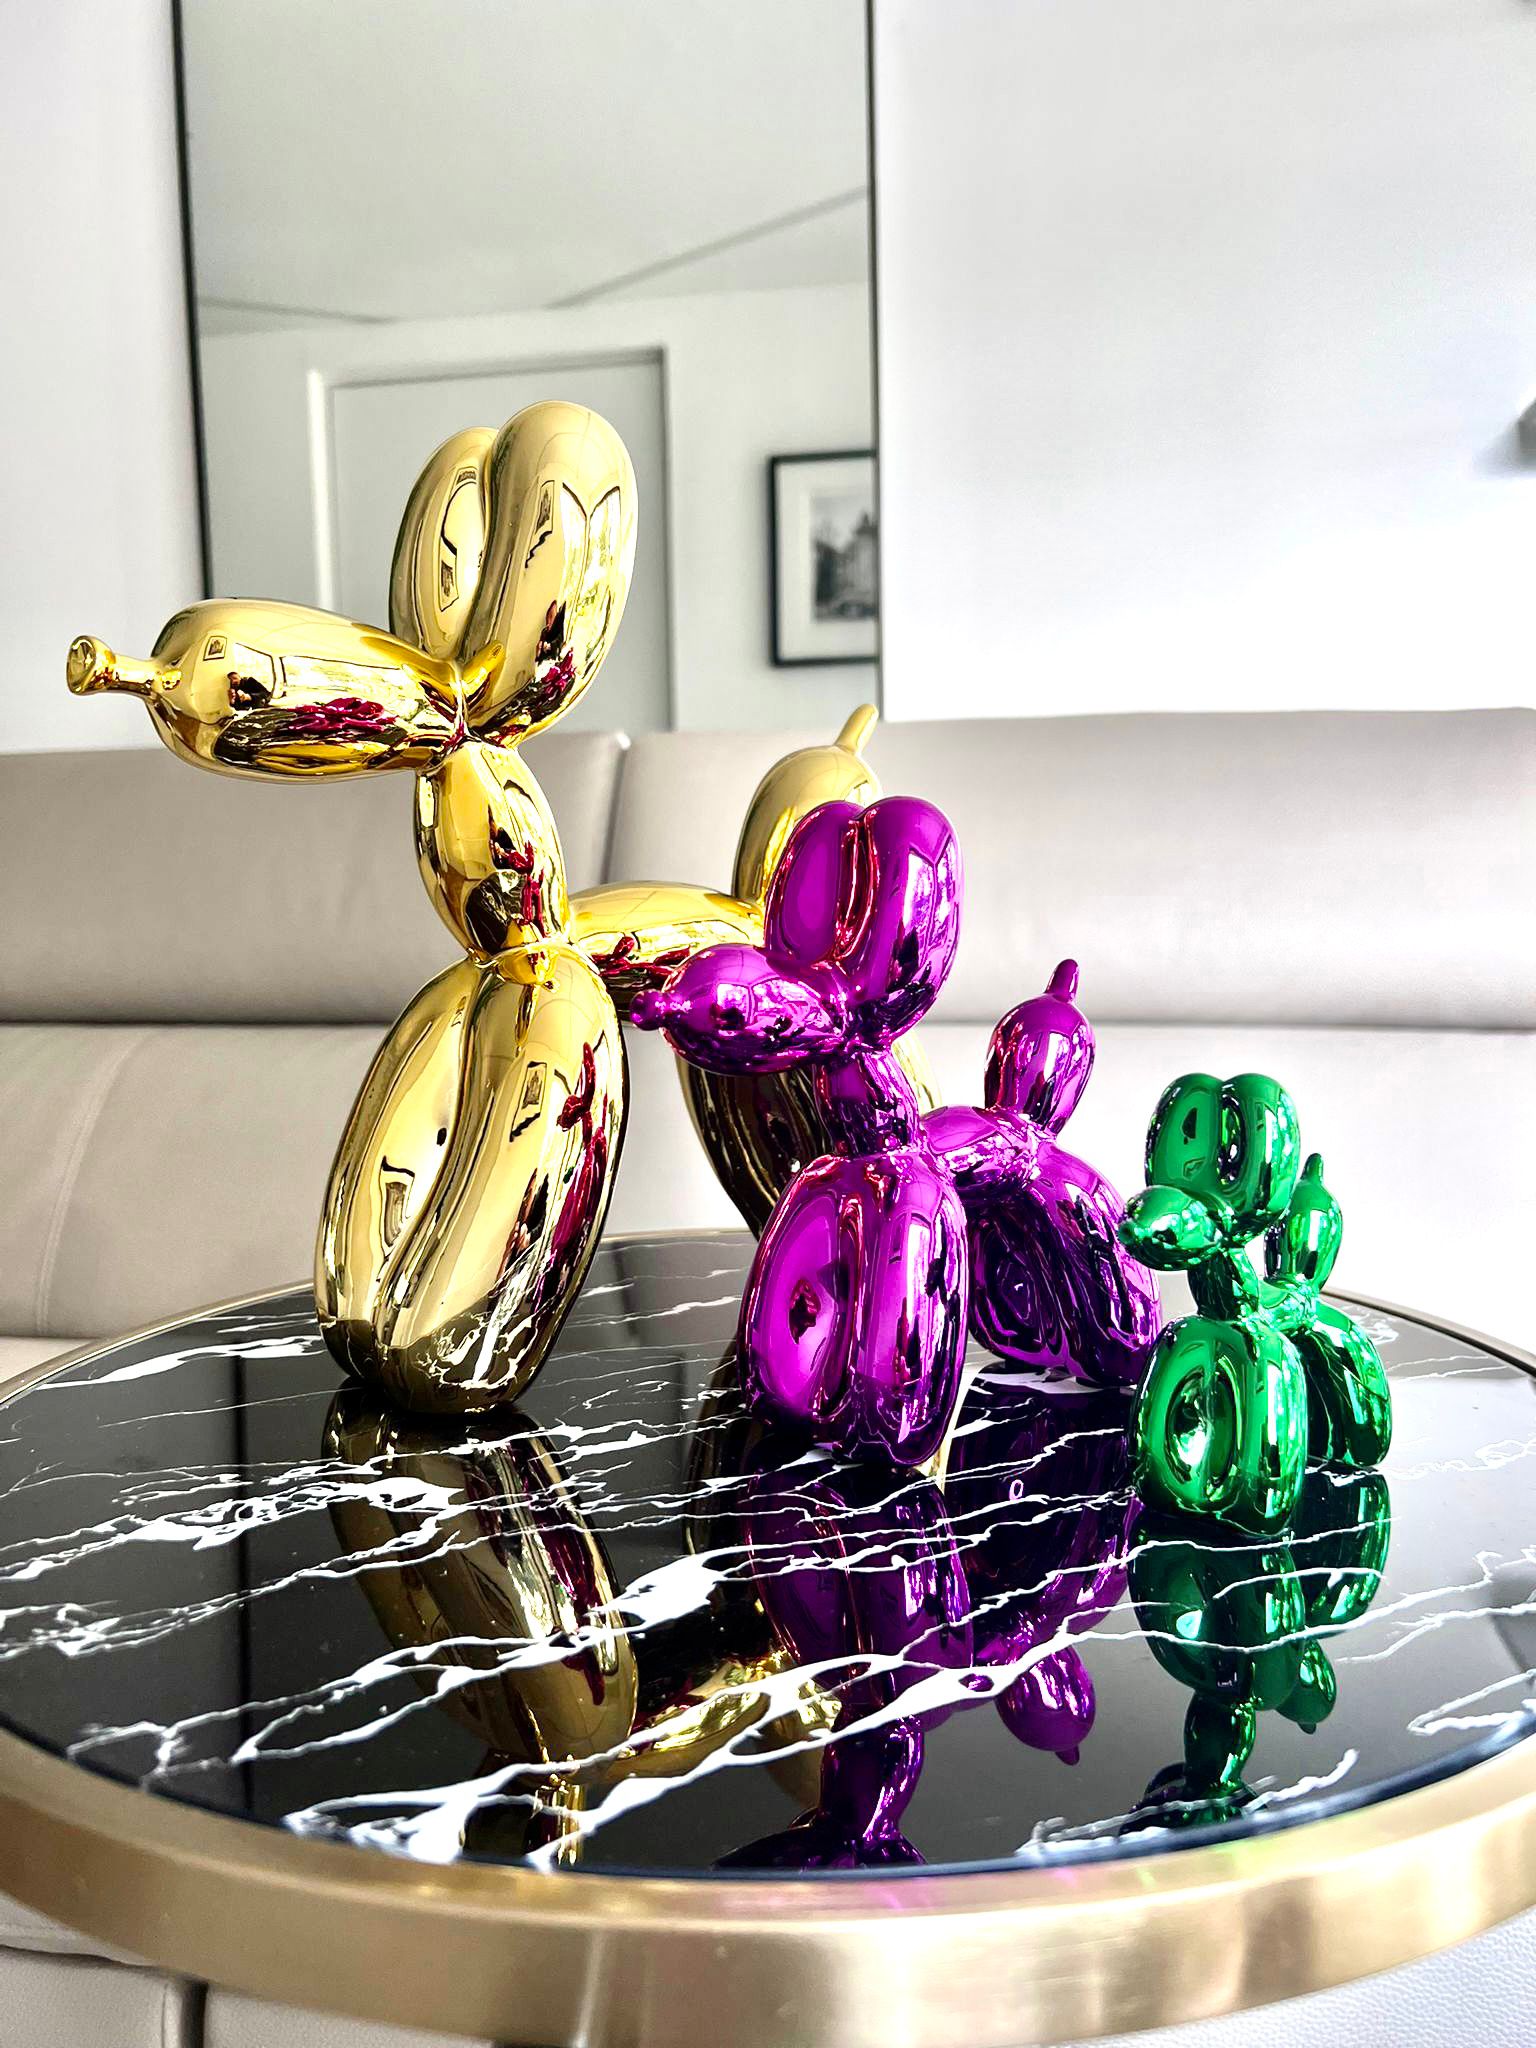 Jeff Koons Inspired Balloon Dog Sculptures